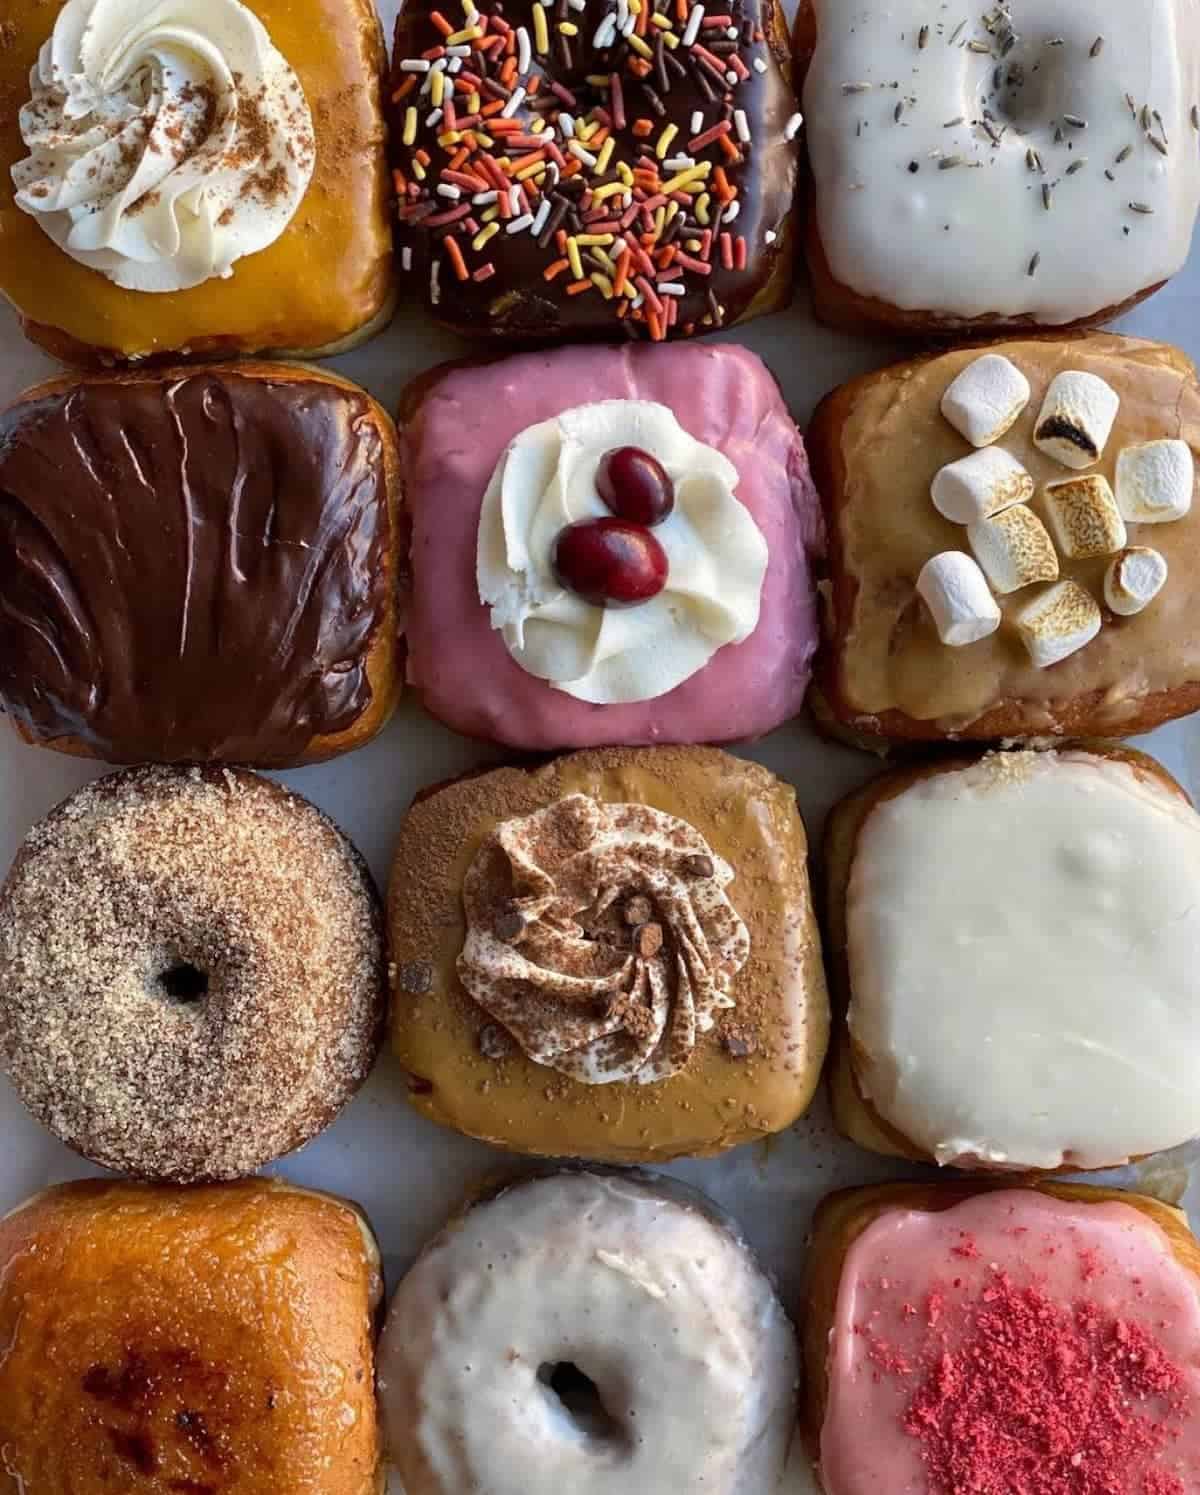 Assorted vegan donuts from The Vegan Doughnut Company.